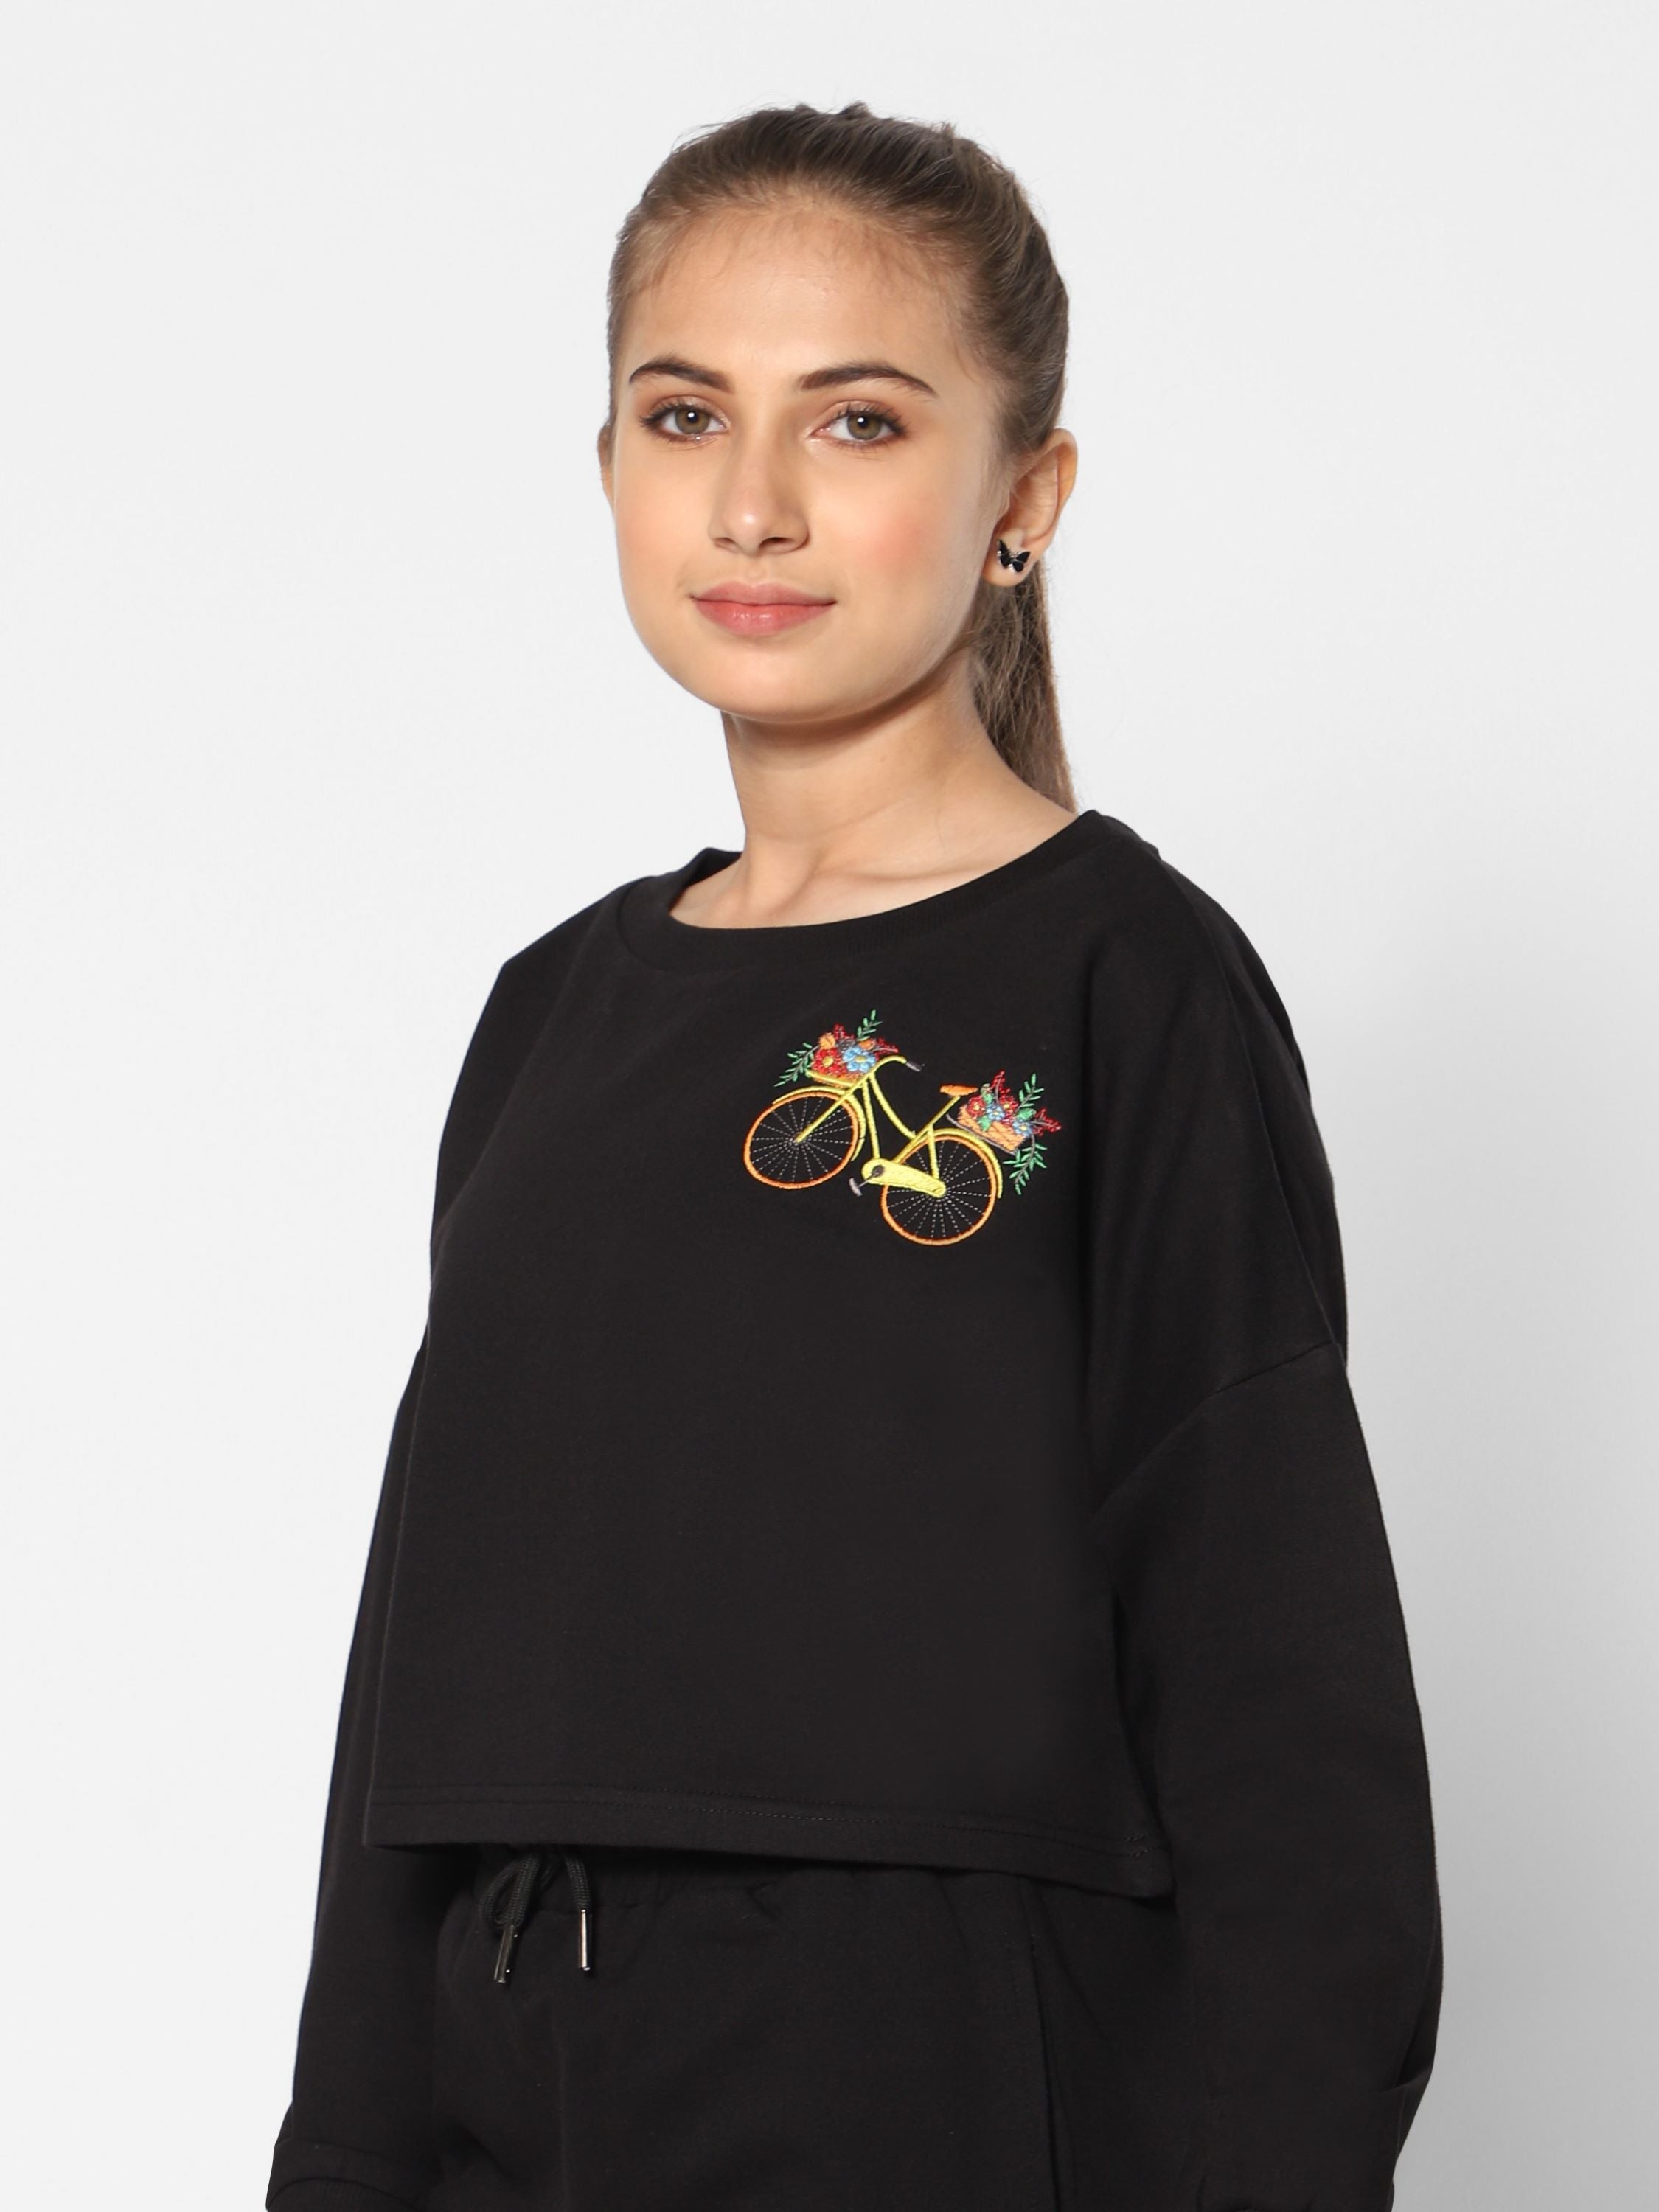 TeenTrums Girls Crop Sweat top - cycle embroidery - black